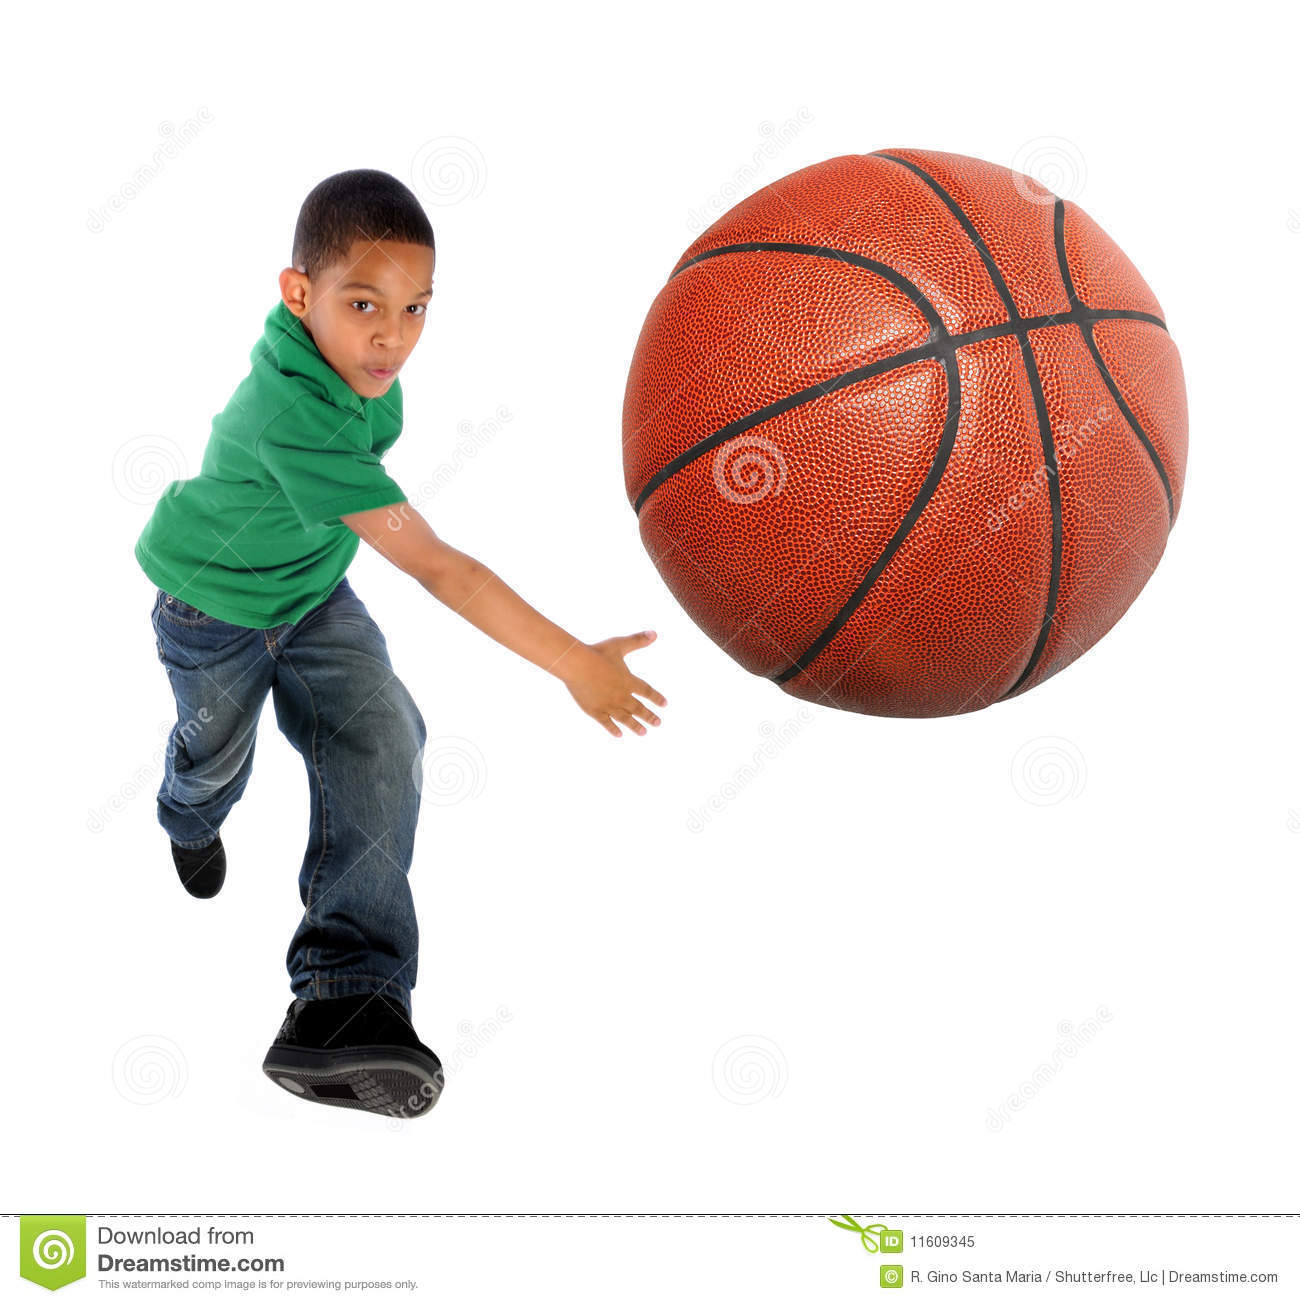 young-boy-playing-basketball-11609345